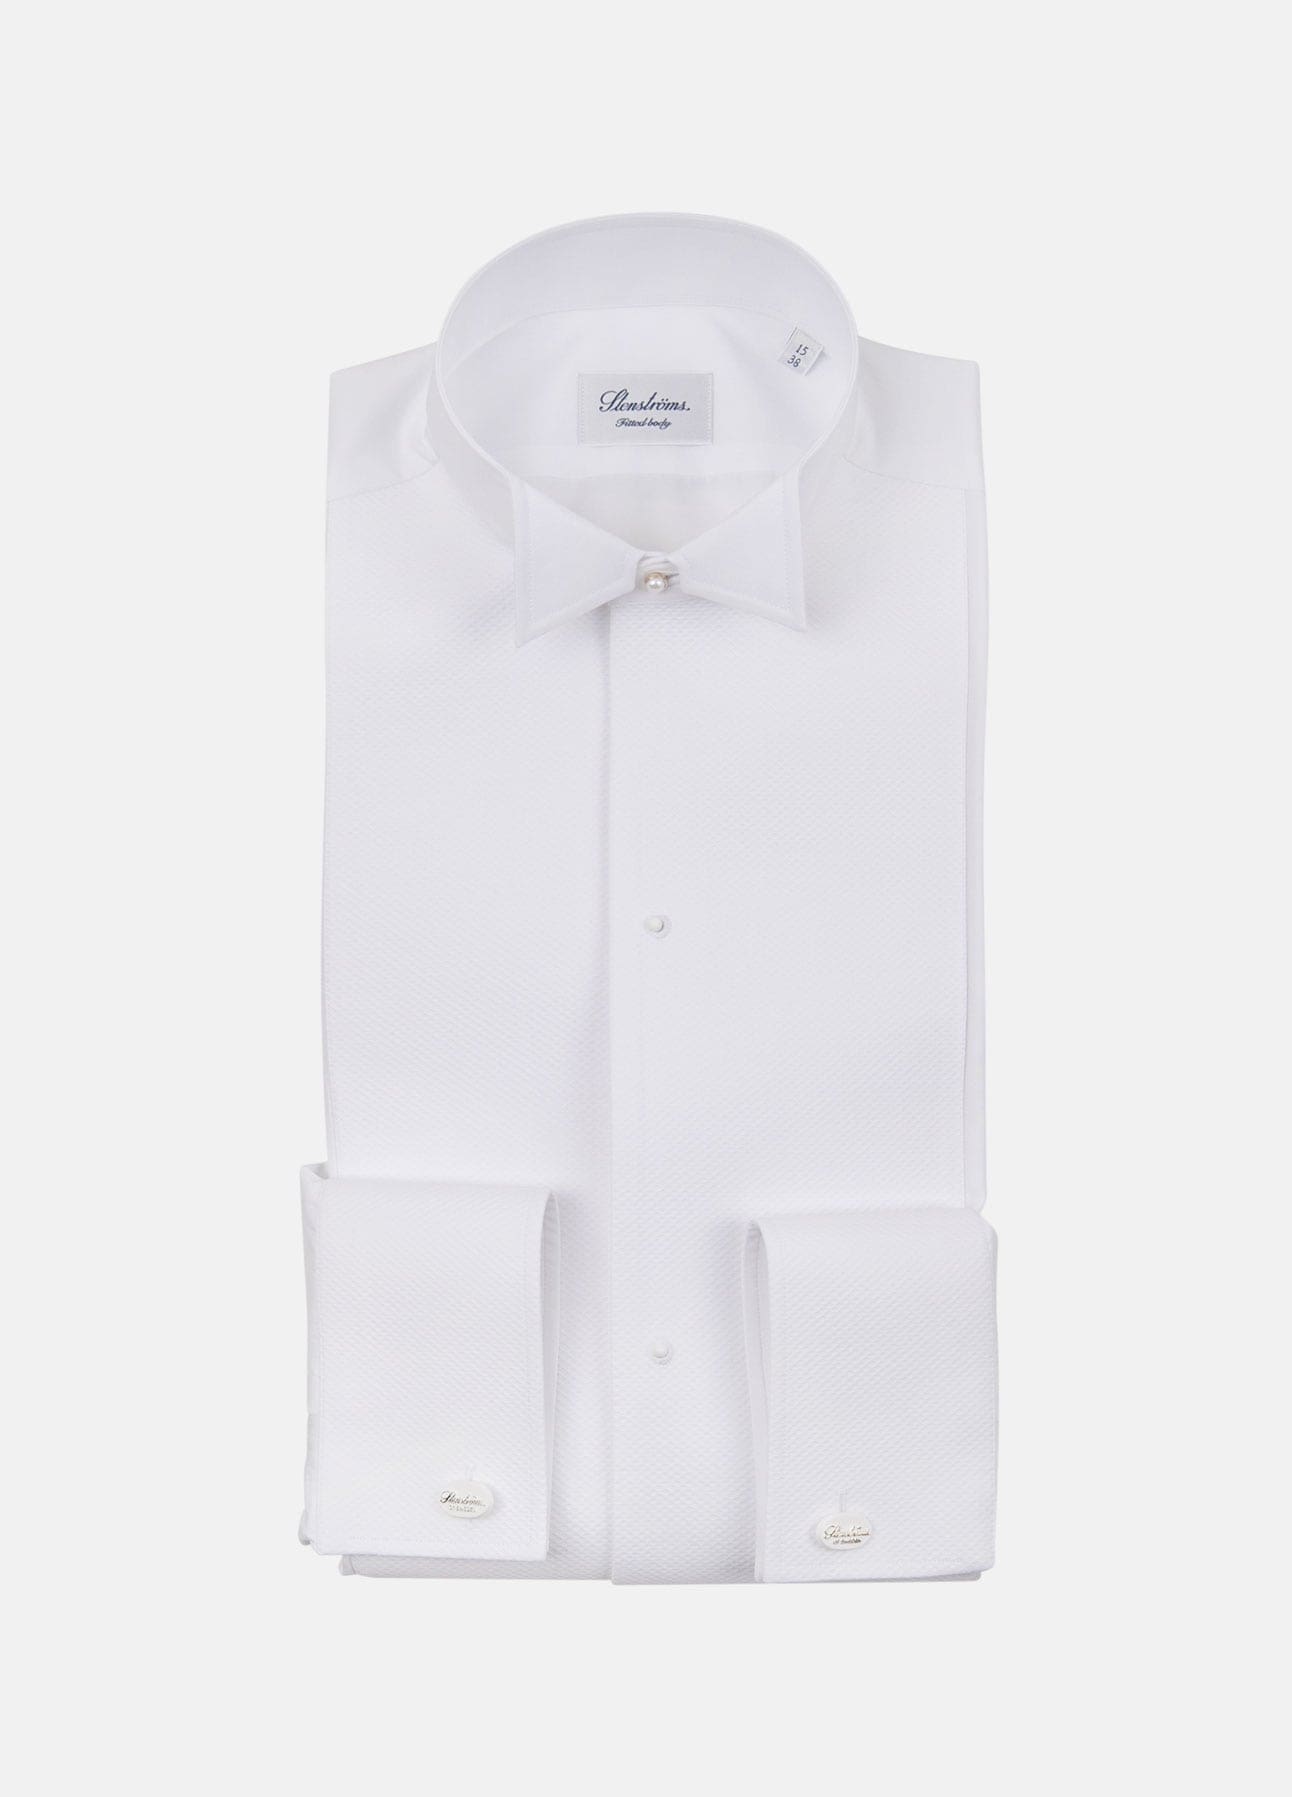 hvid kjoleskjorte i fitted body fra Stenströms